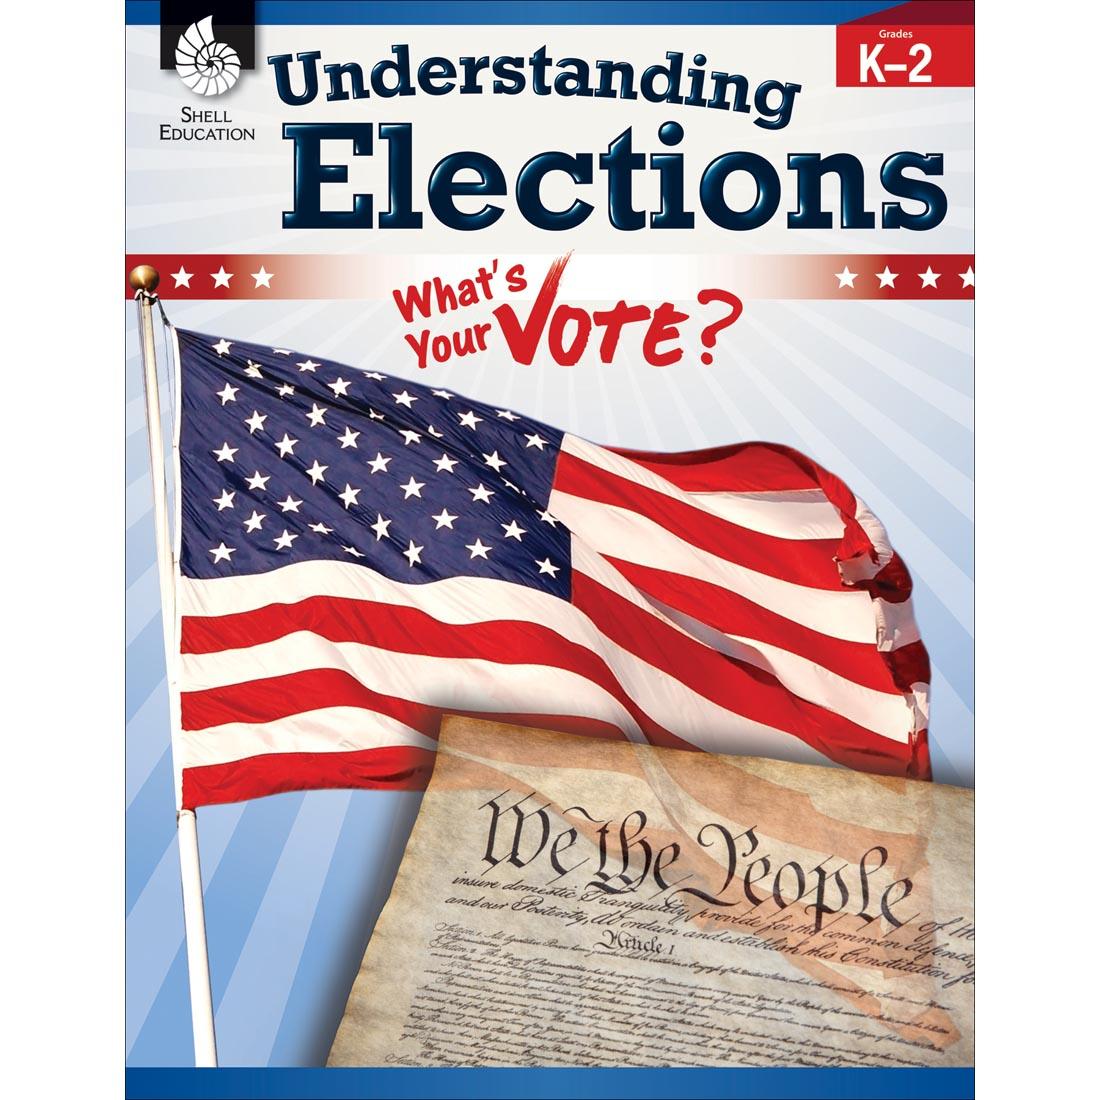 Understanding Elections Book for Grades K-2